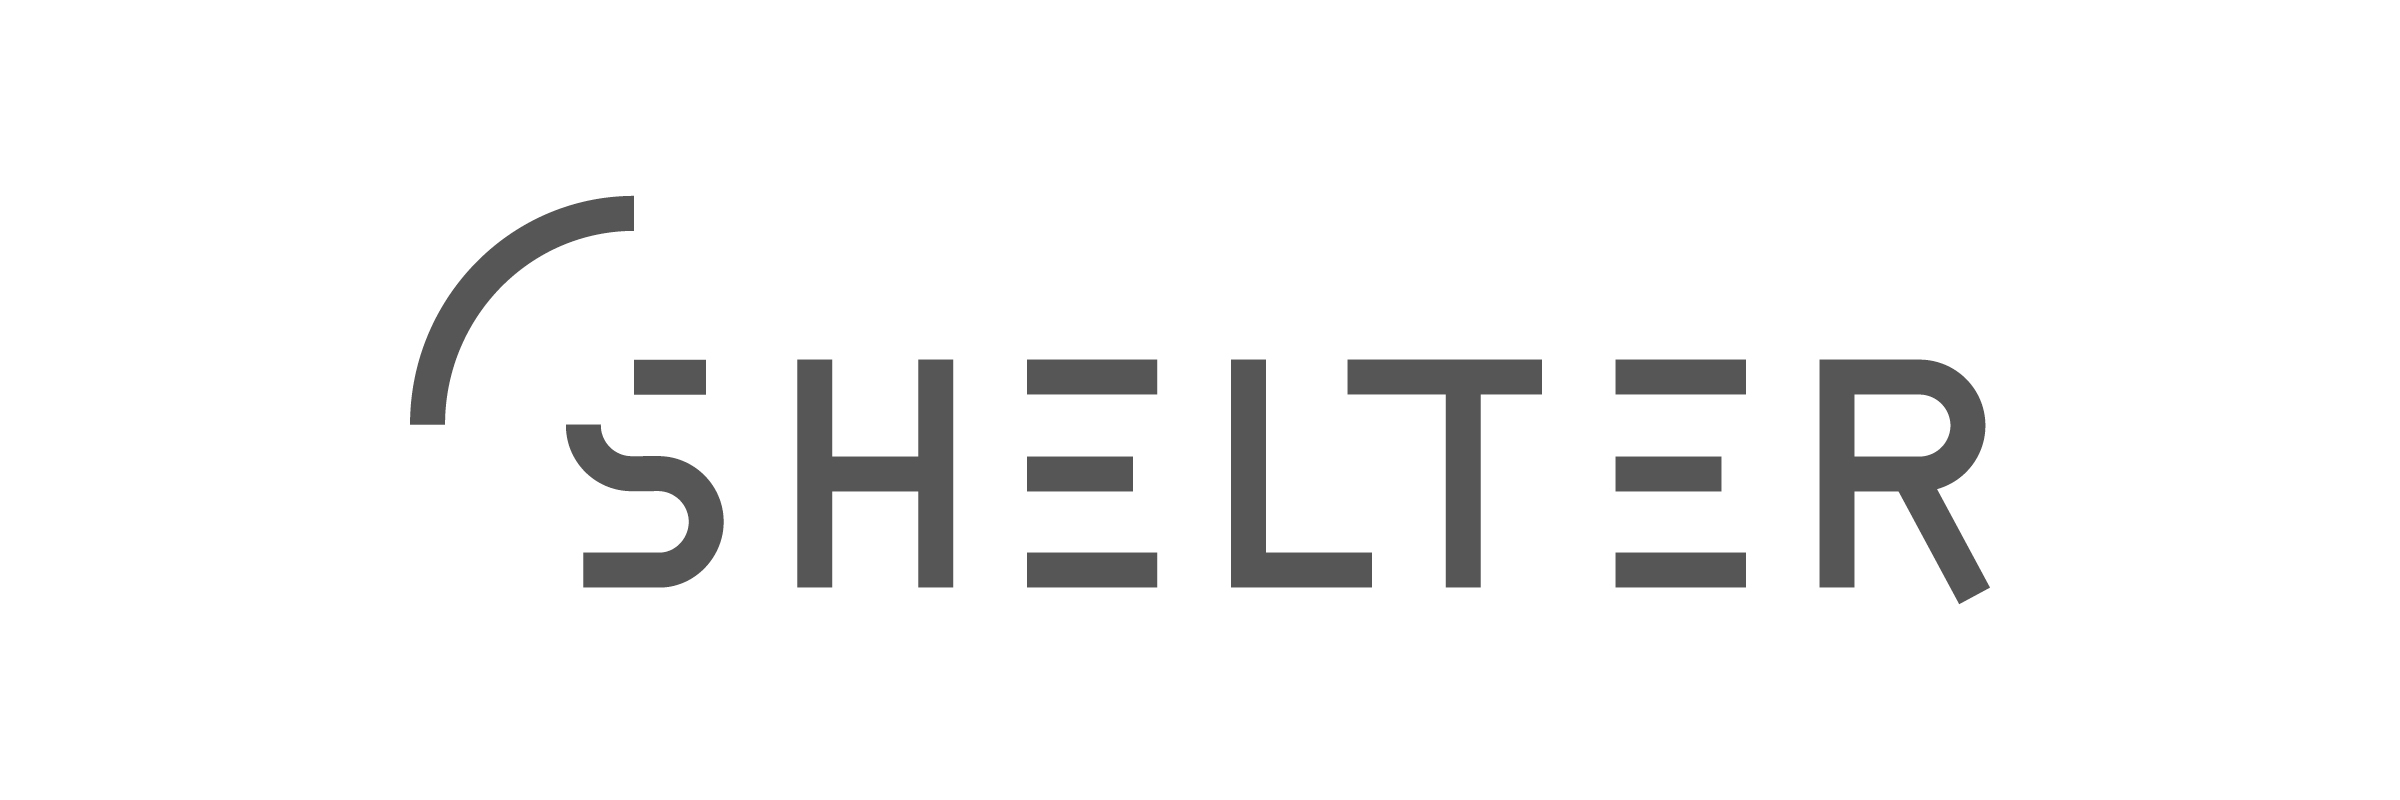 Shelter Logo - Shelter Architecture Identity System – Malley Design